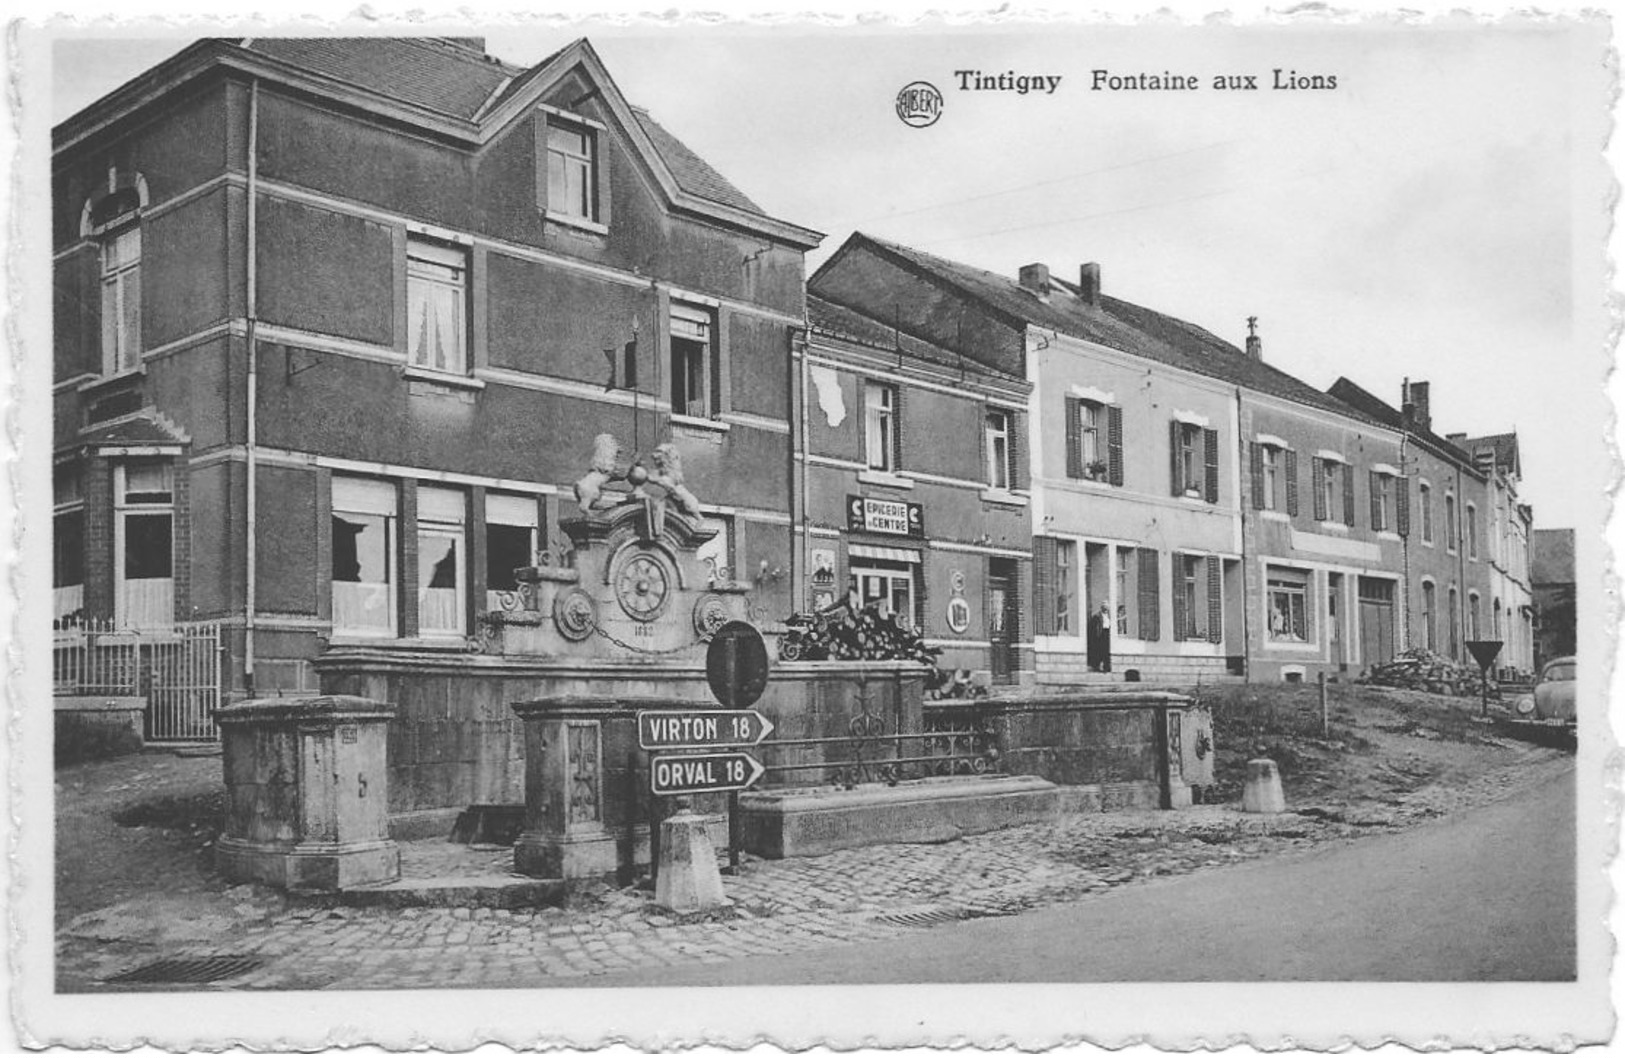 Tintigny Fontaine Aux Lions - Tintigny